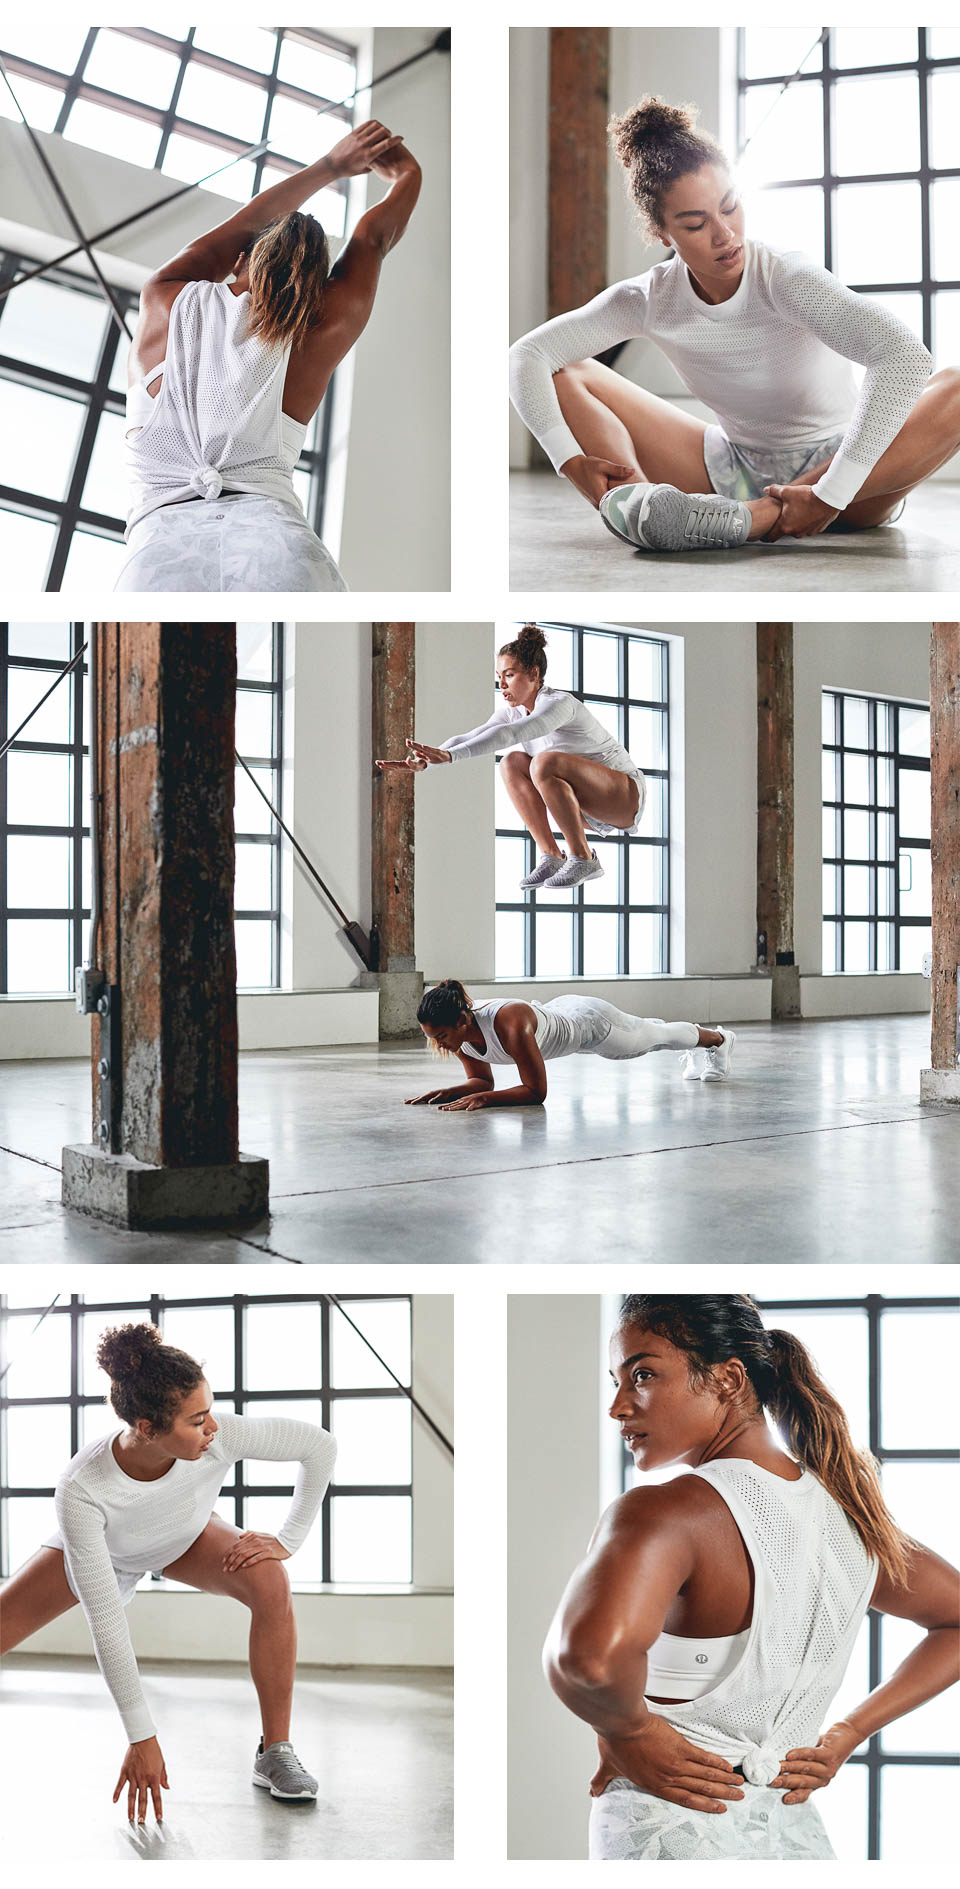 Mahina-Garcia-Catrina-Judge-Training-Workout-Vancouver-Canada-photoshoot-lululemon-athletica-Matt-Korinek-Photographer-960px-2.jpg